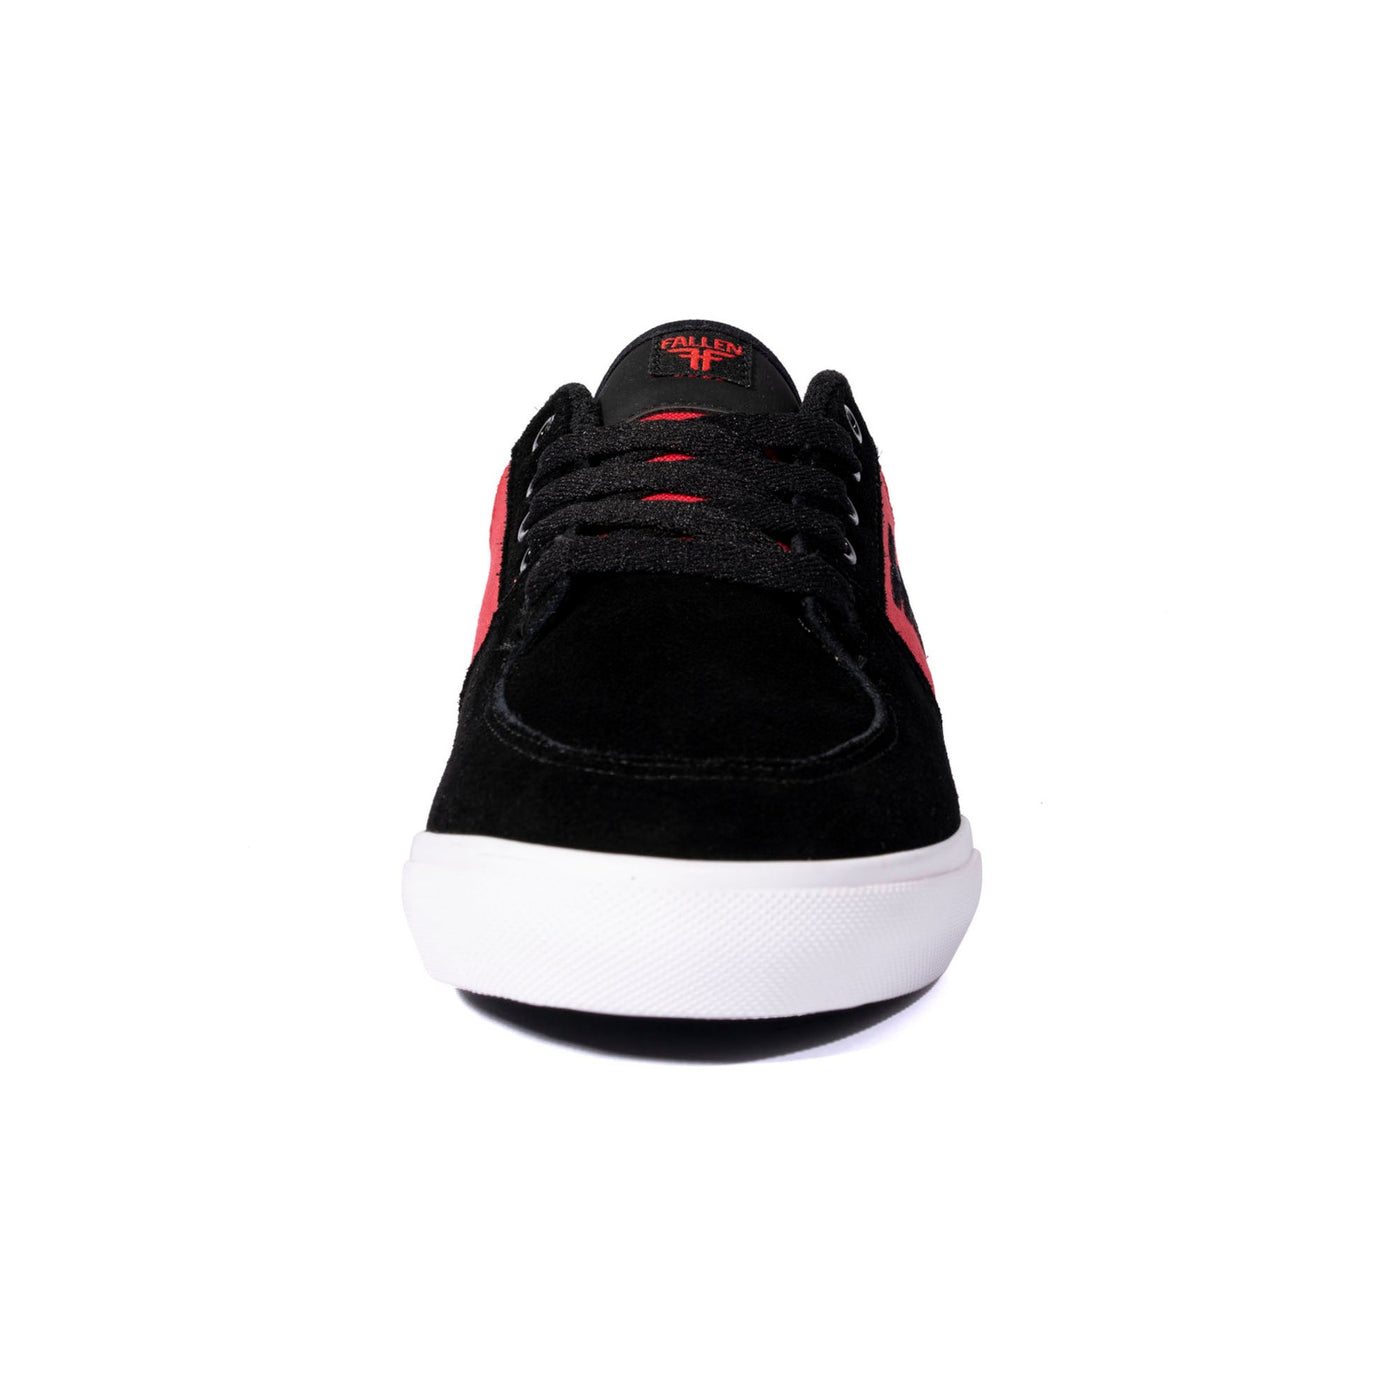 Fallen Footwear Patriot Kids skate shoes in Black / Red front image